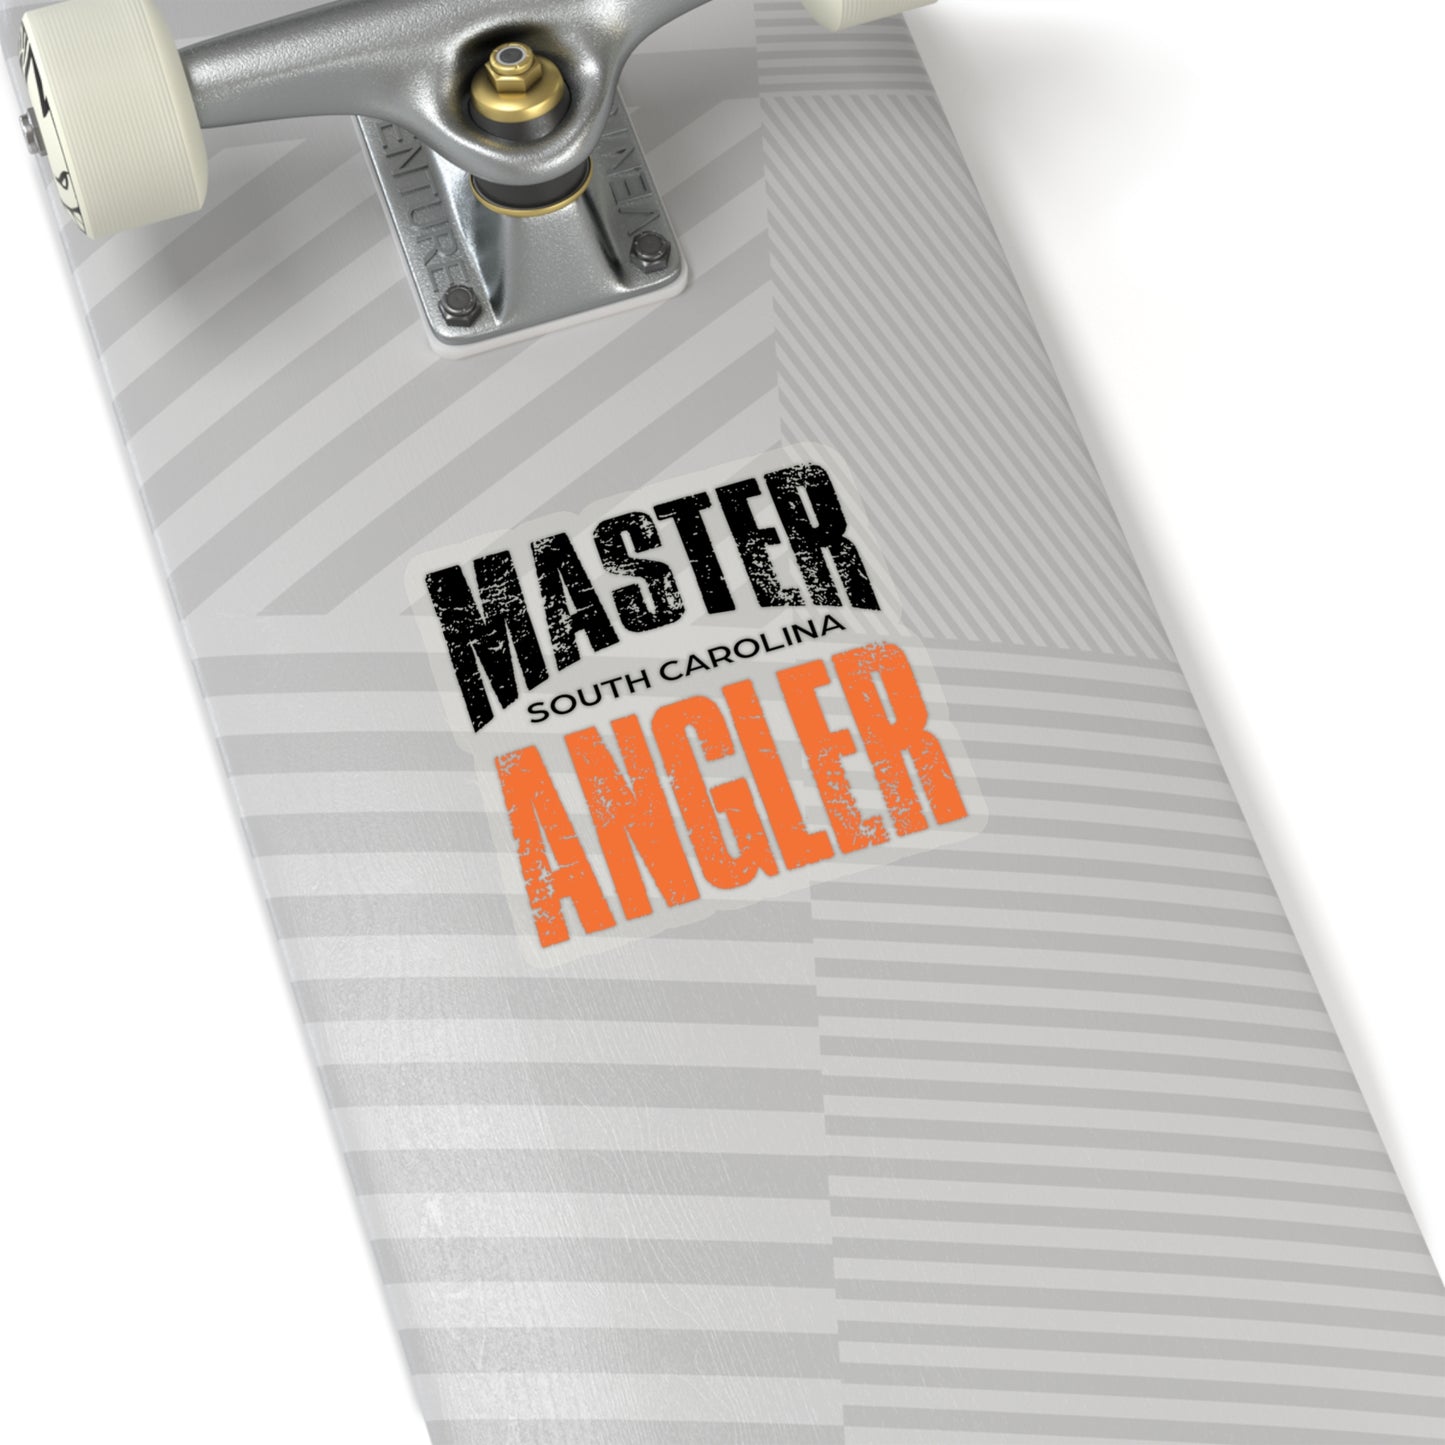 South Carolina Master Angler Sticker - ORANGE